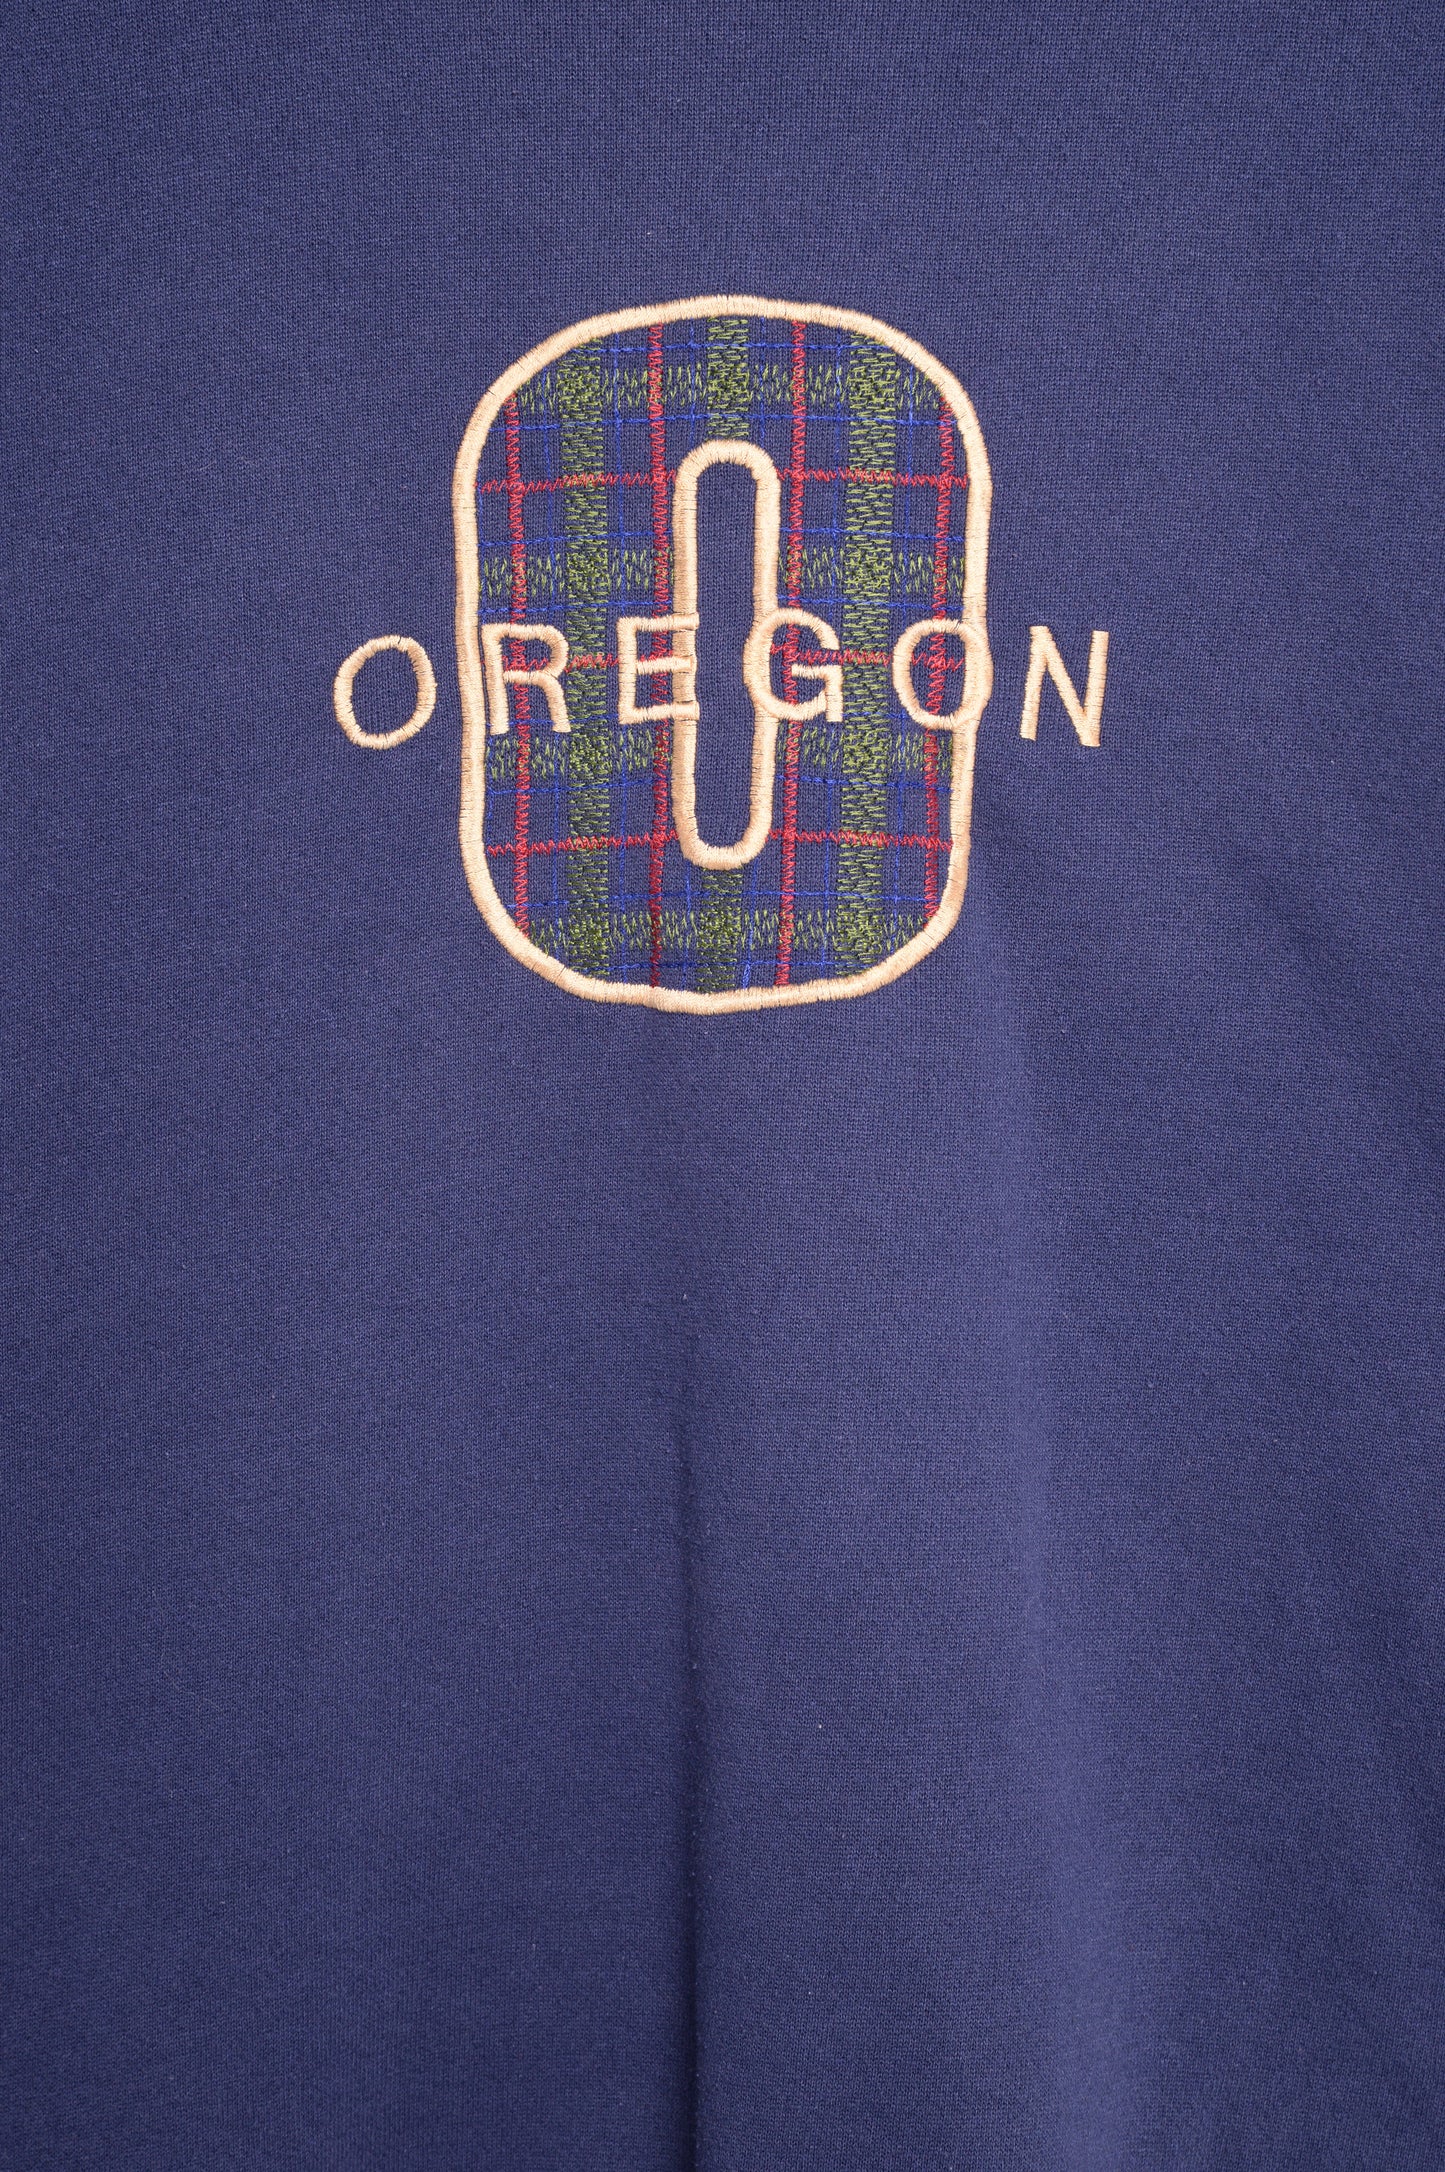 1990s Faded Embroidered Oregon Sweatshirt